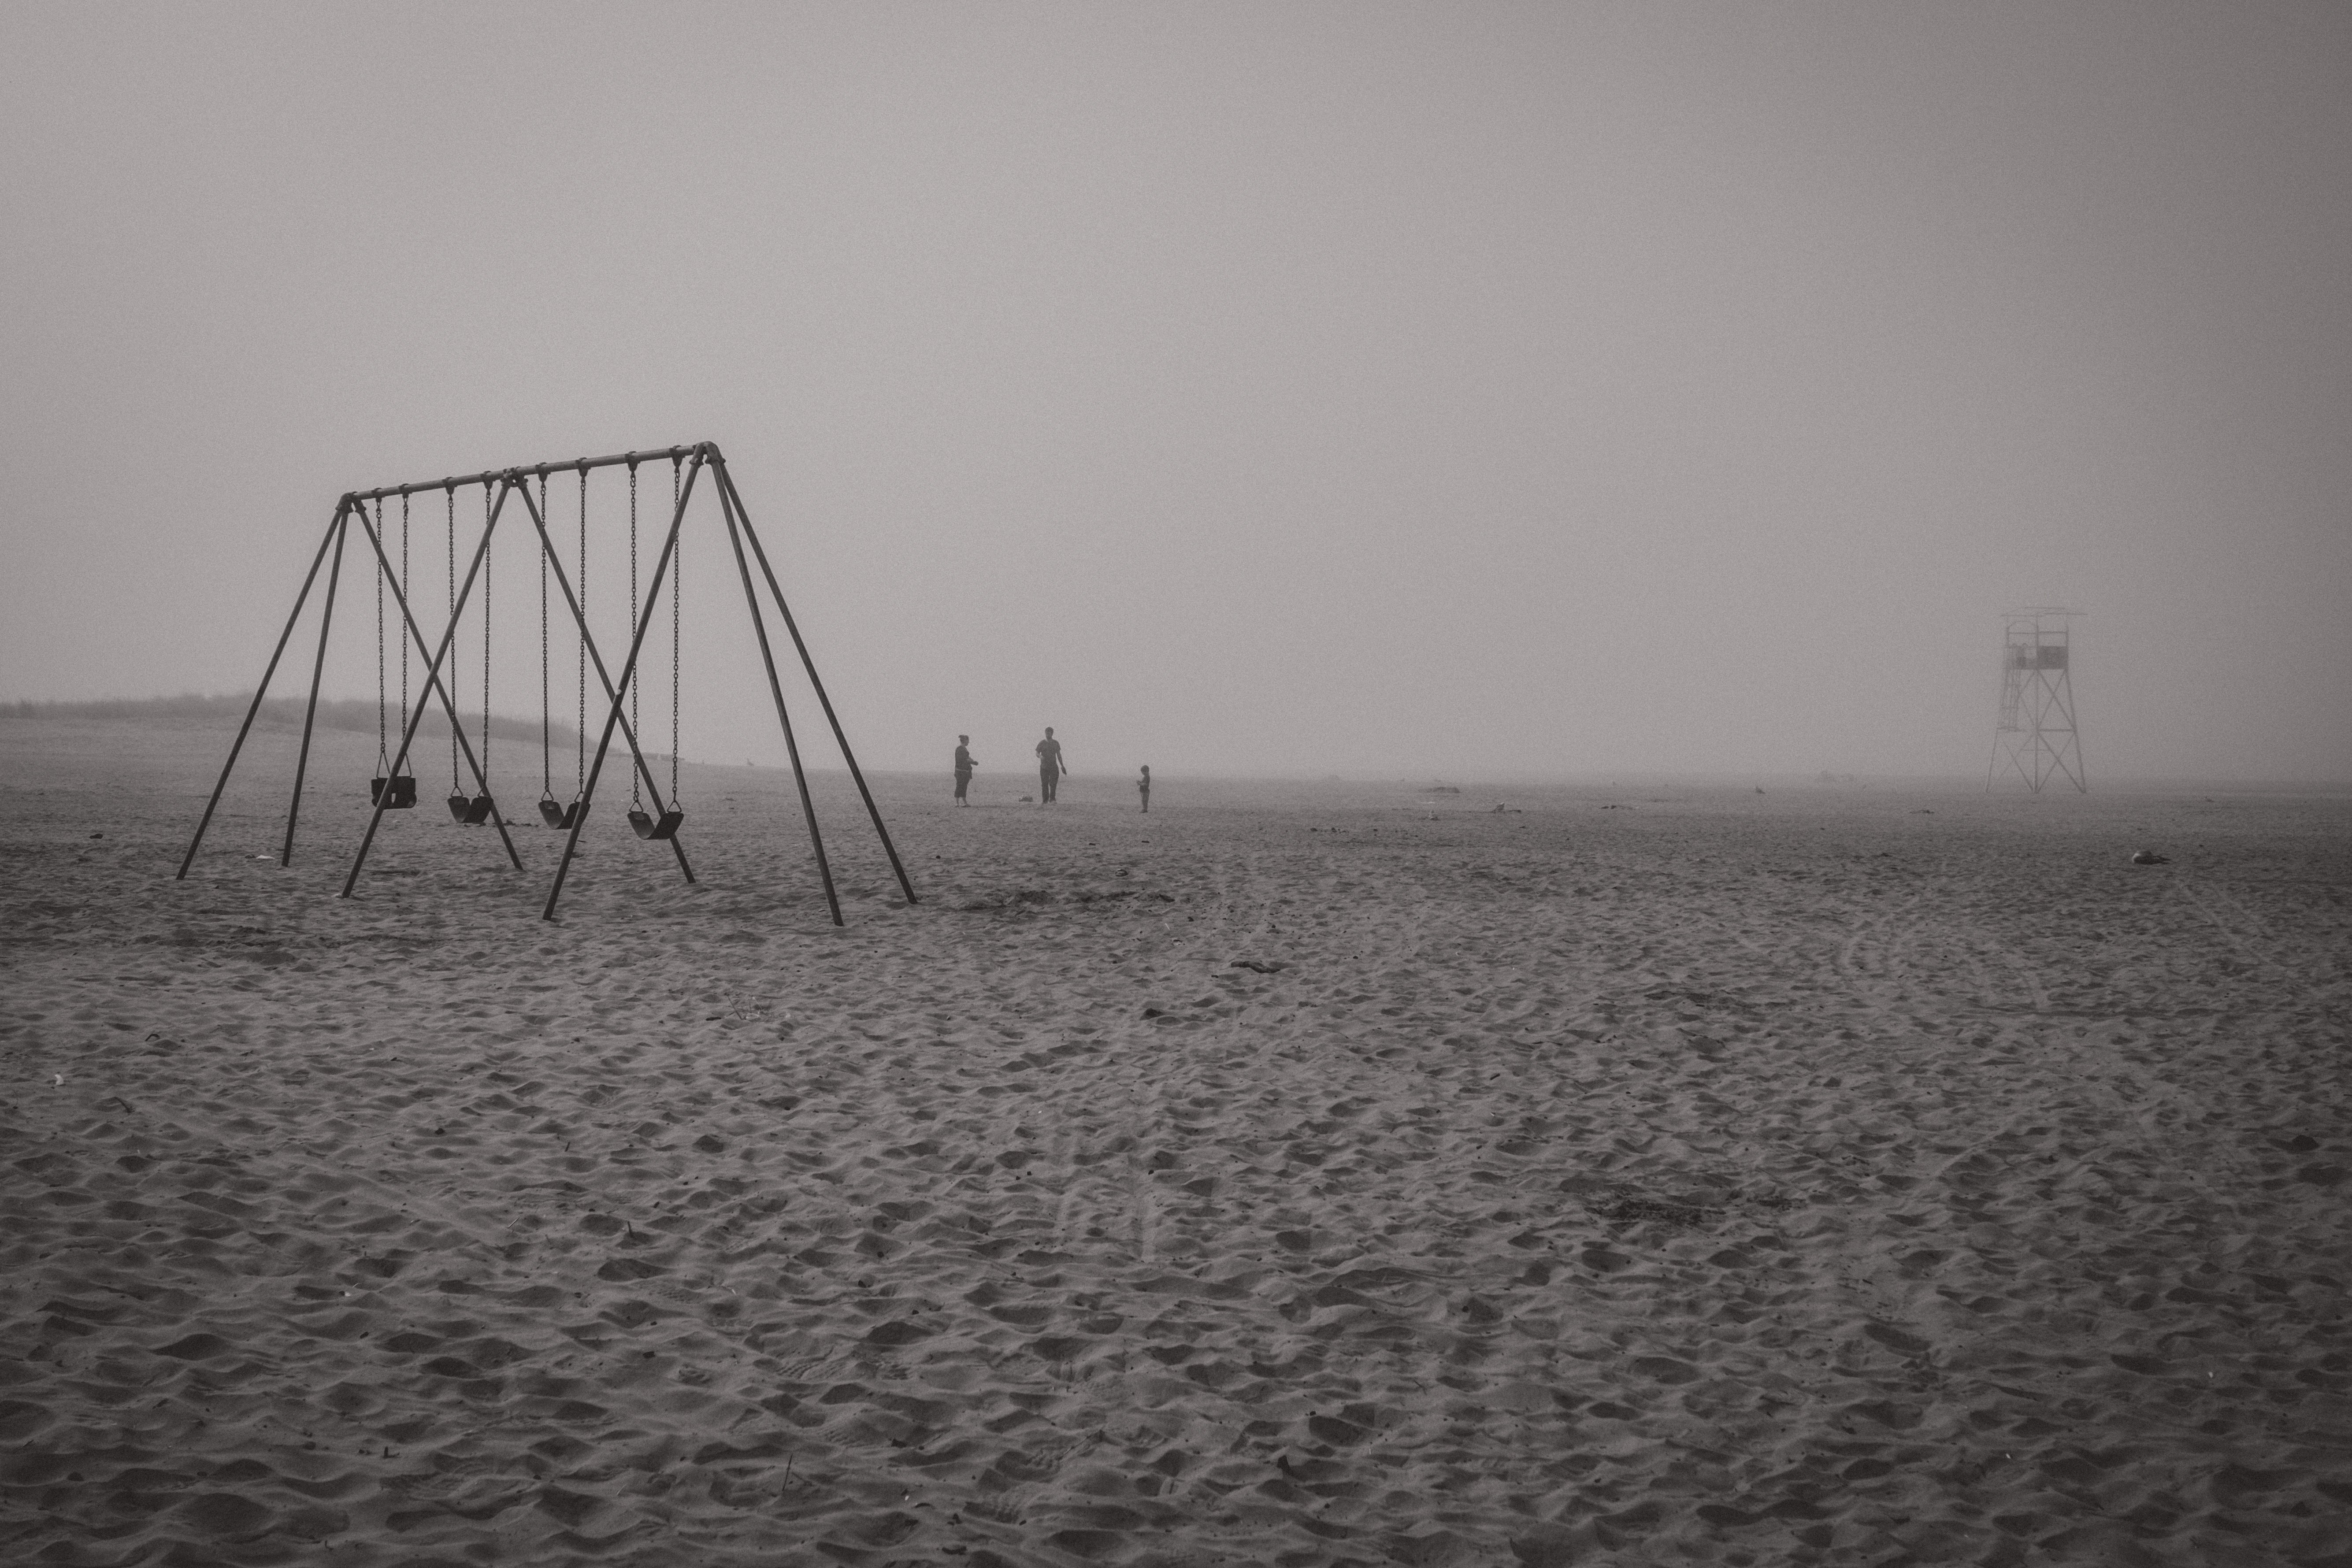 Empty Swings on a Misty Beach - Notice the Space